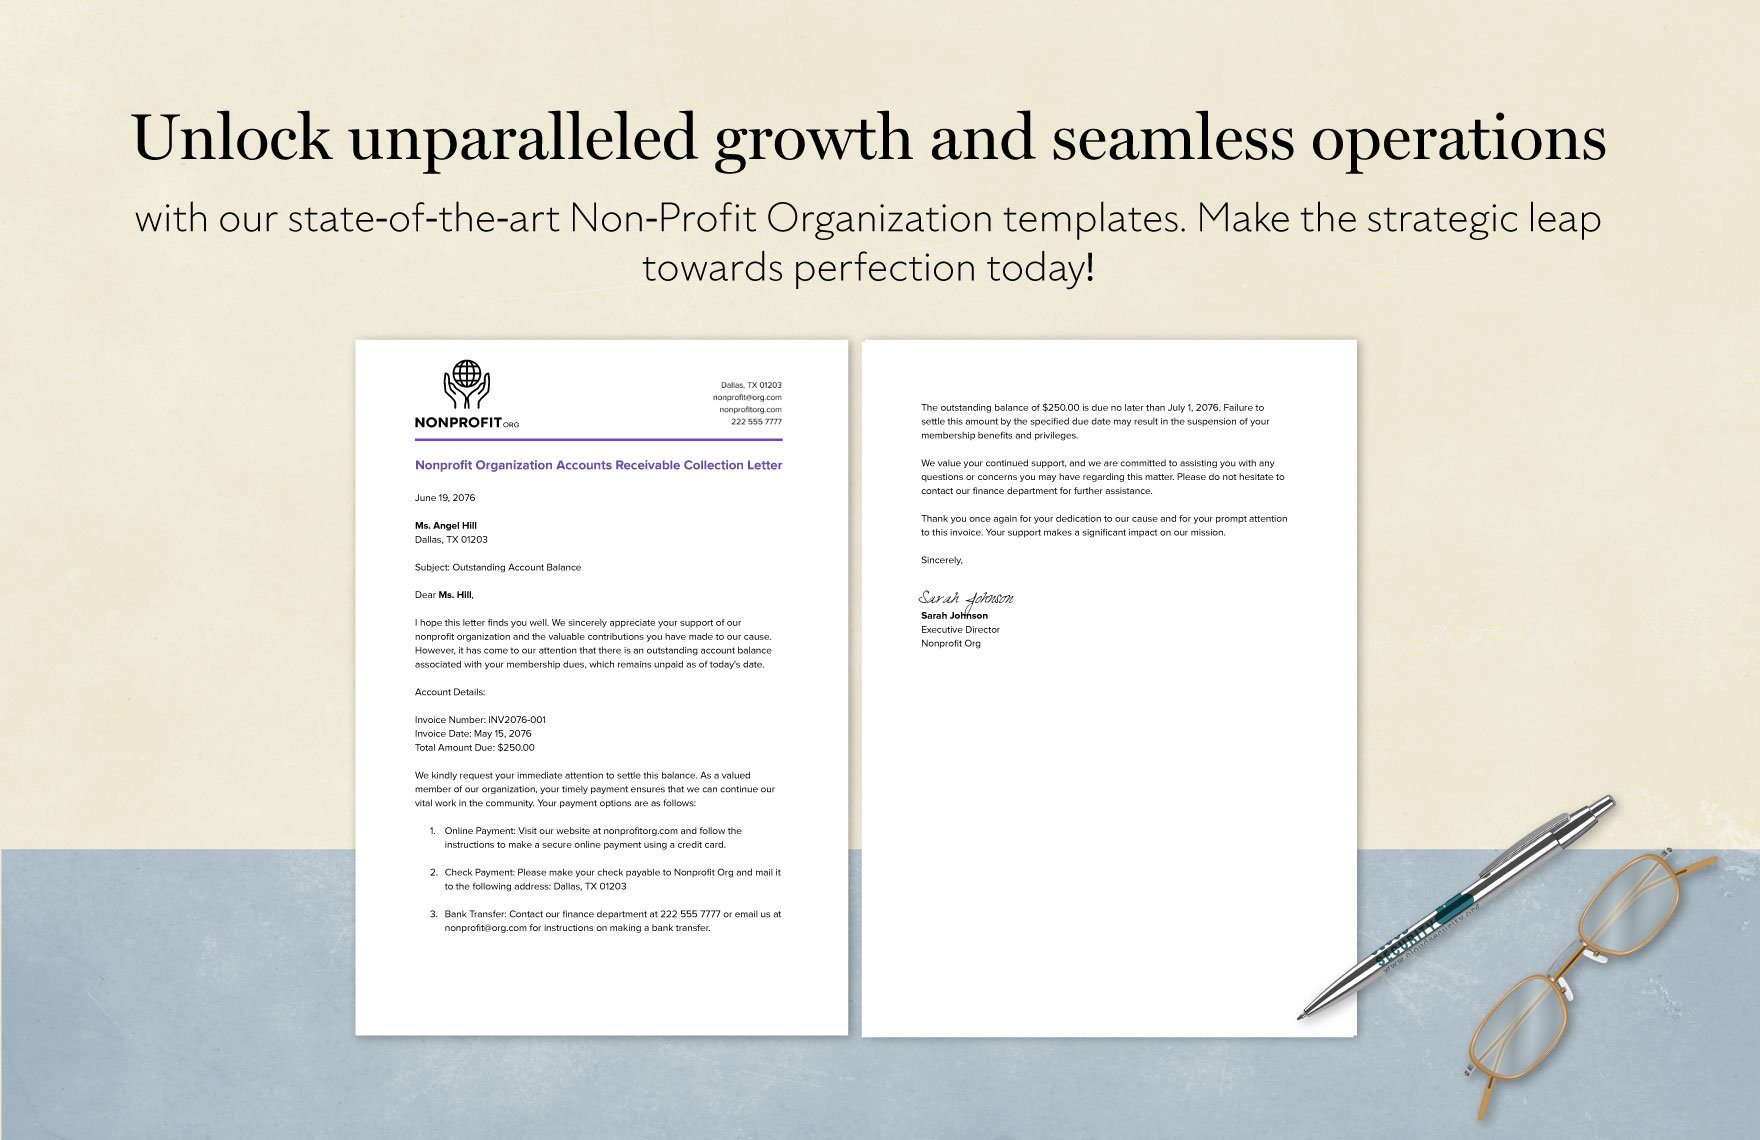 Nonprofit Organization Accounts Receivable Collection Letter Template